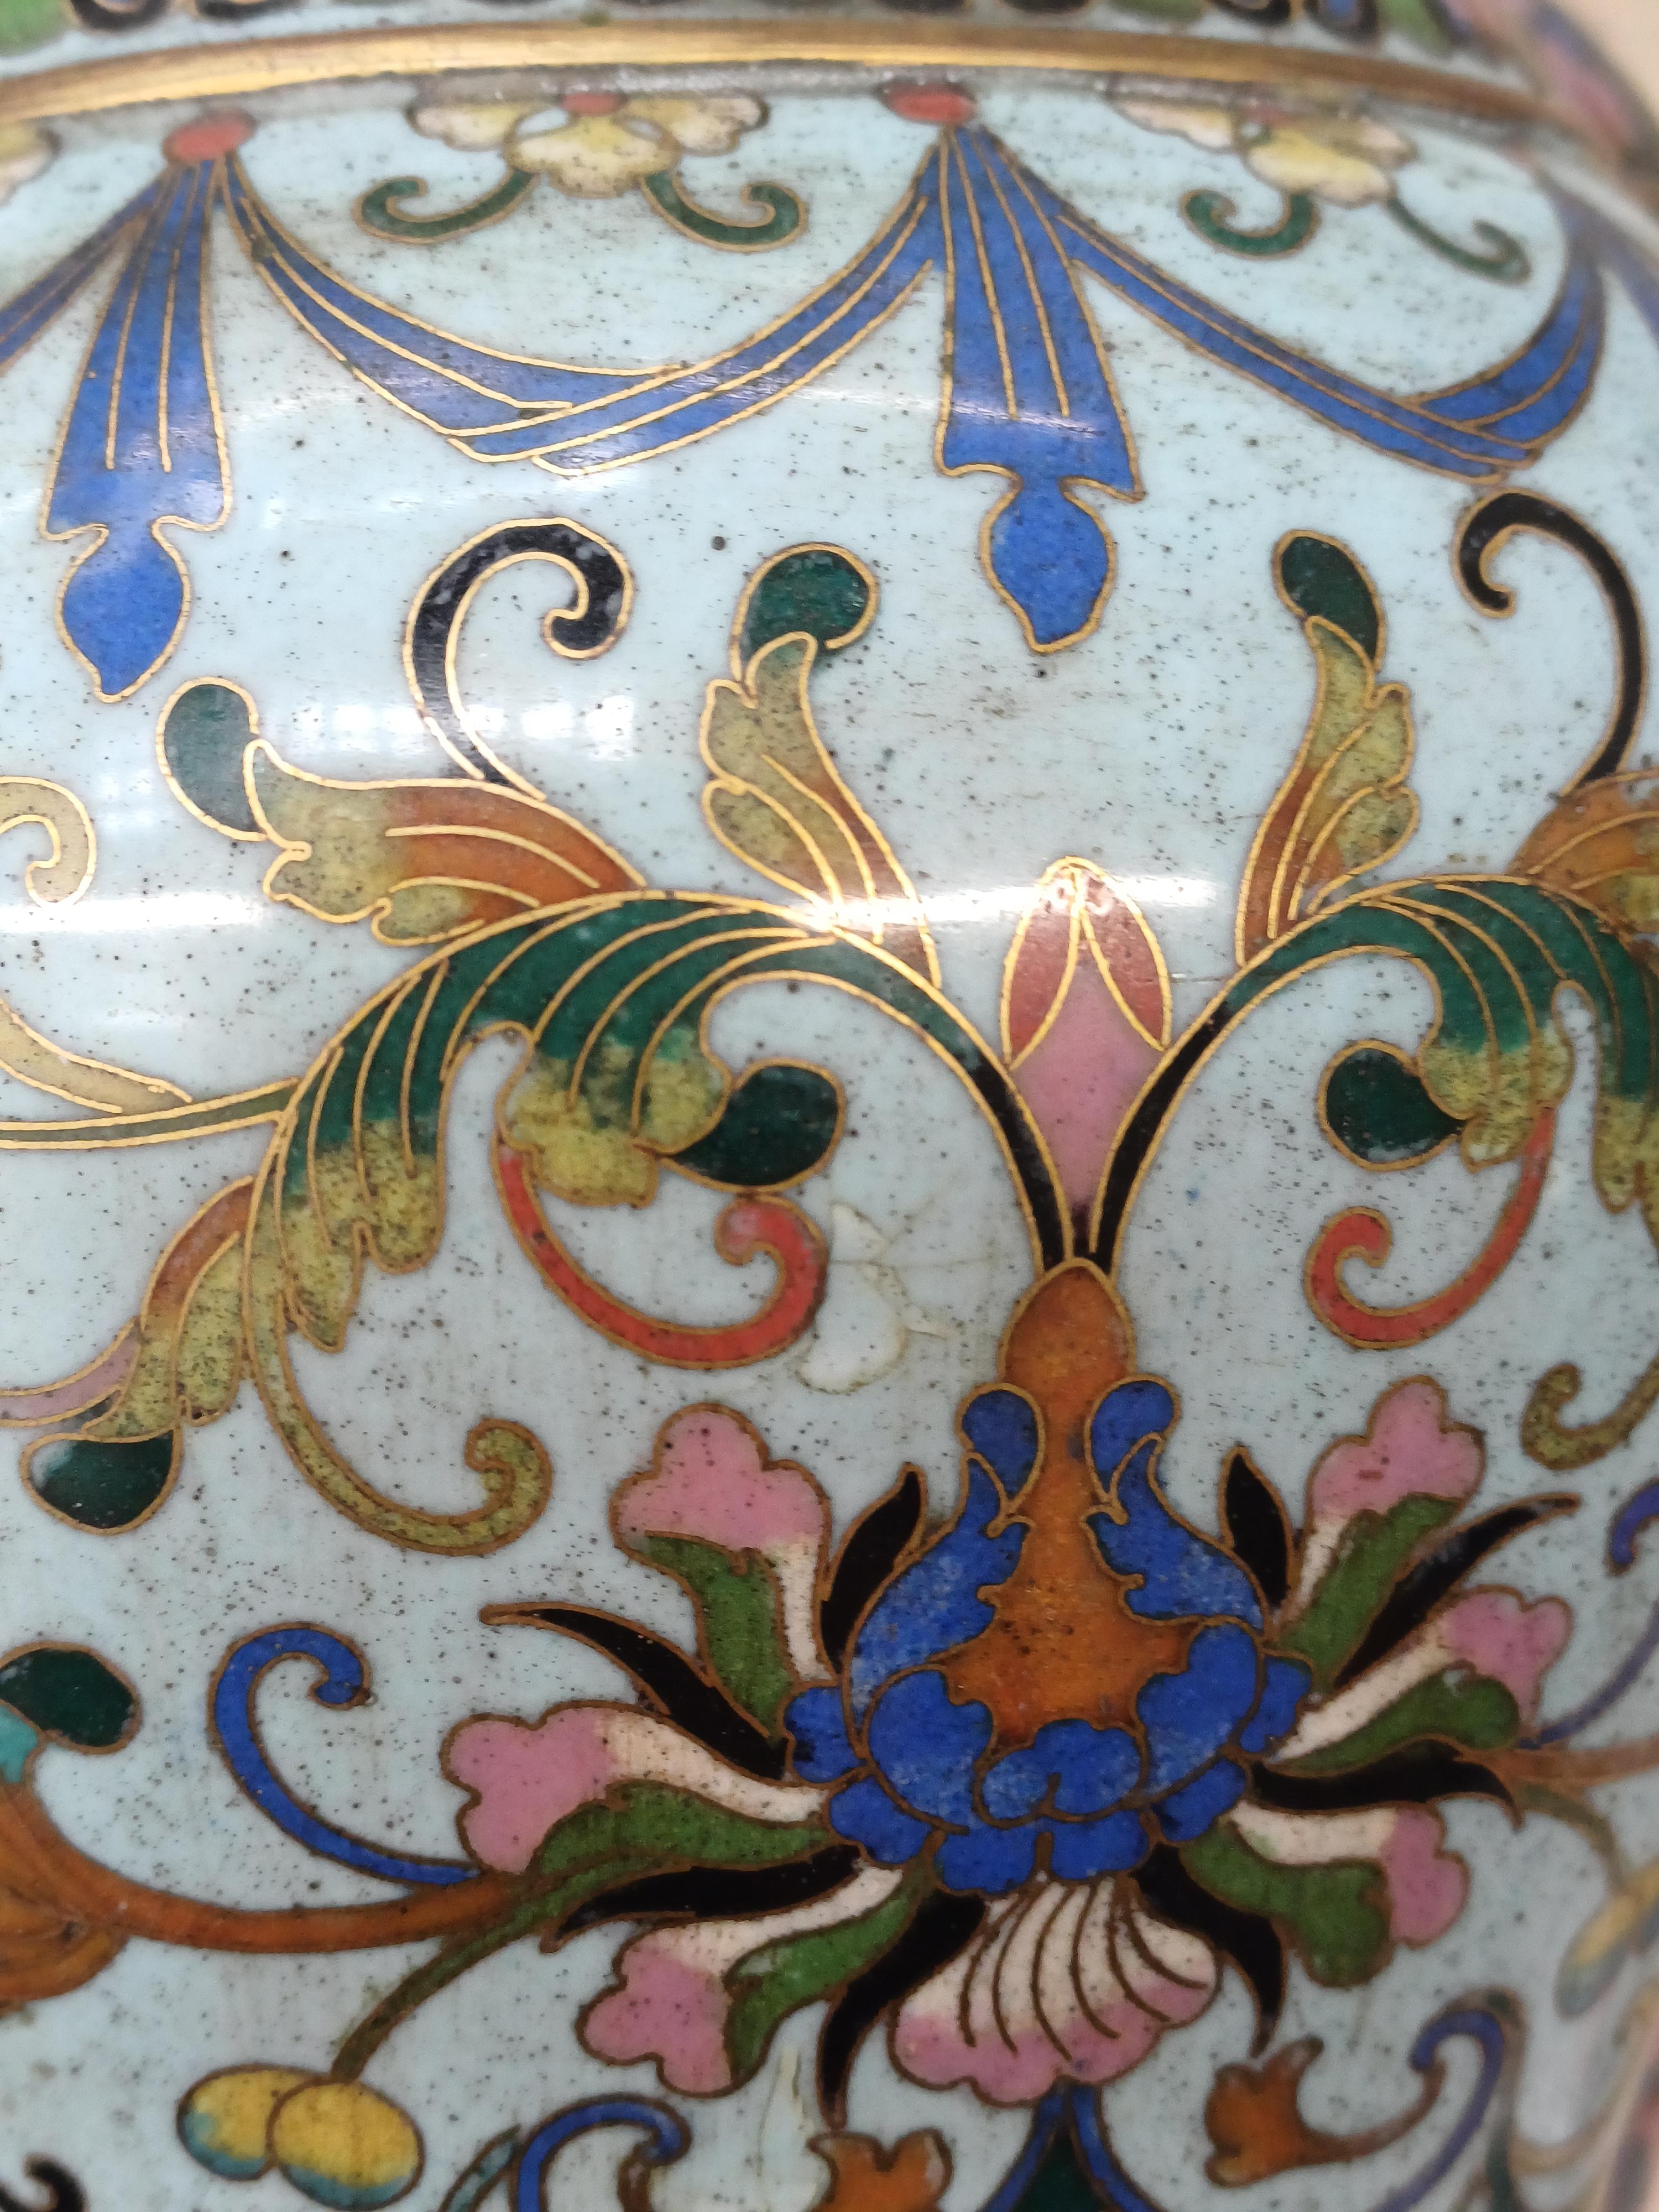 A PAIR OF CHINESE CLOISONNÉ ENAMEL VASES 清十八世紀 銅胎掐絲琺瑯番蓮紋瓶一對 - Image 10 of 17